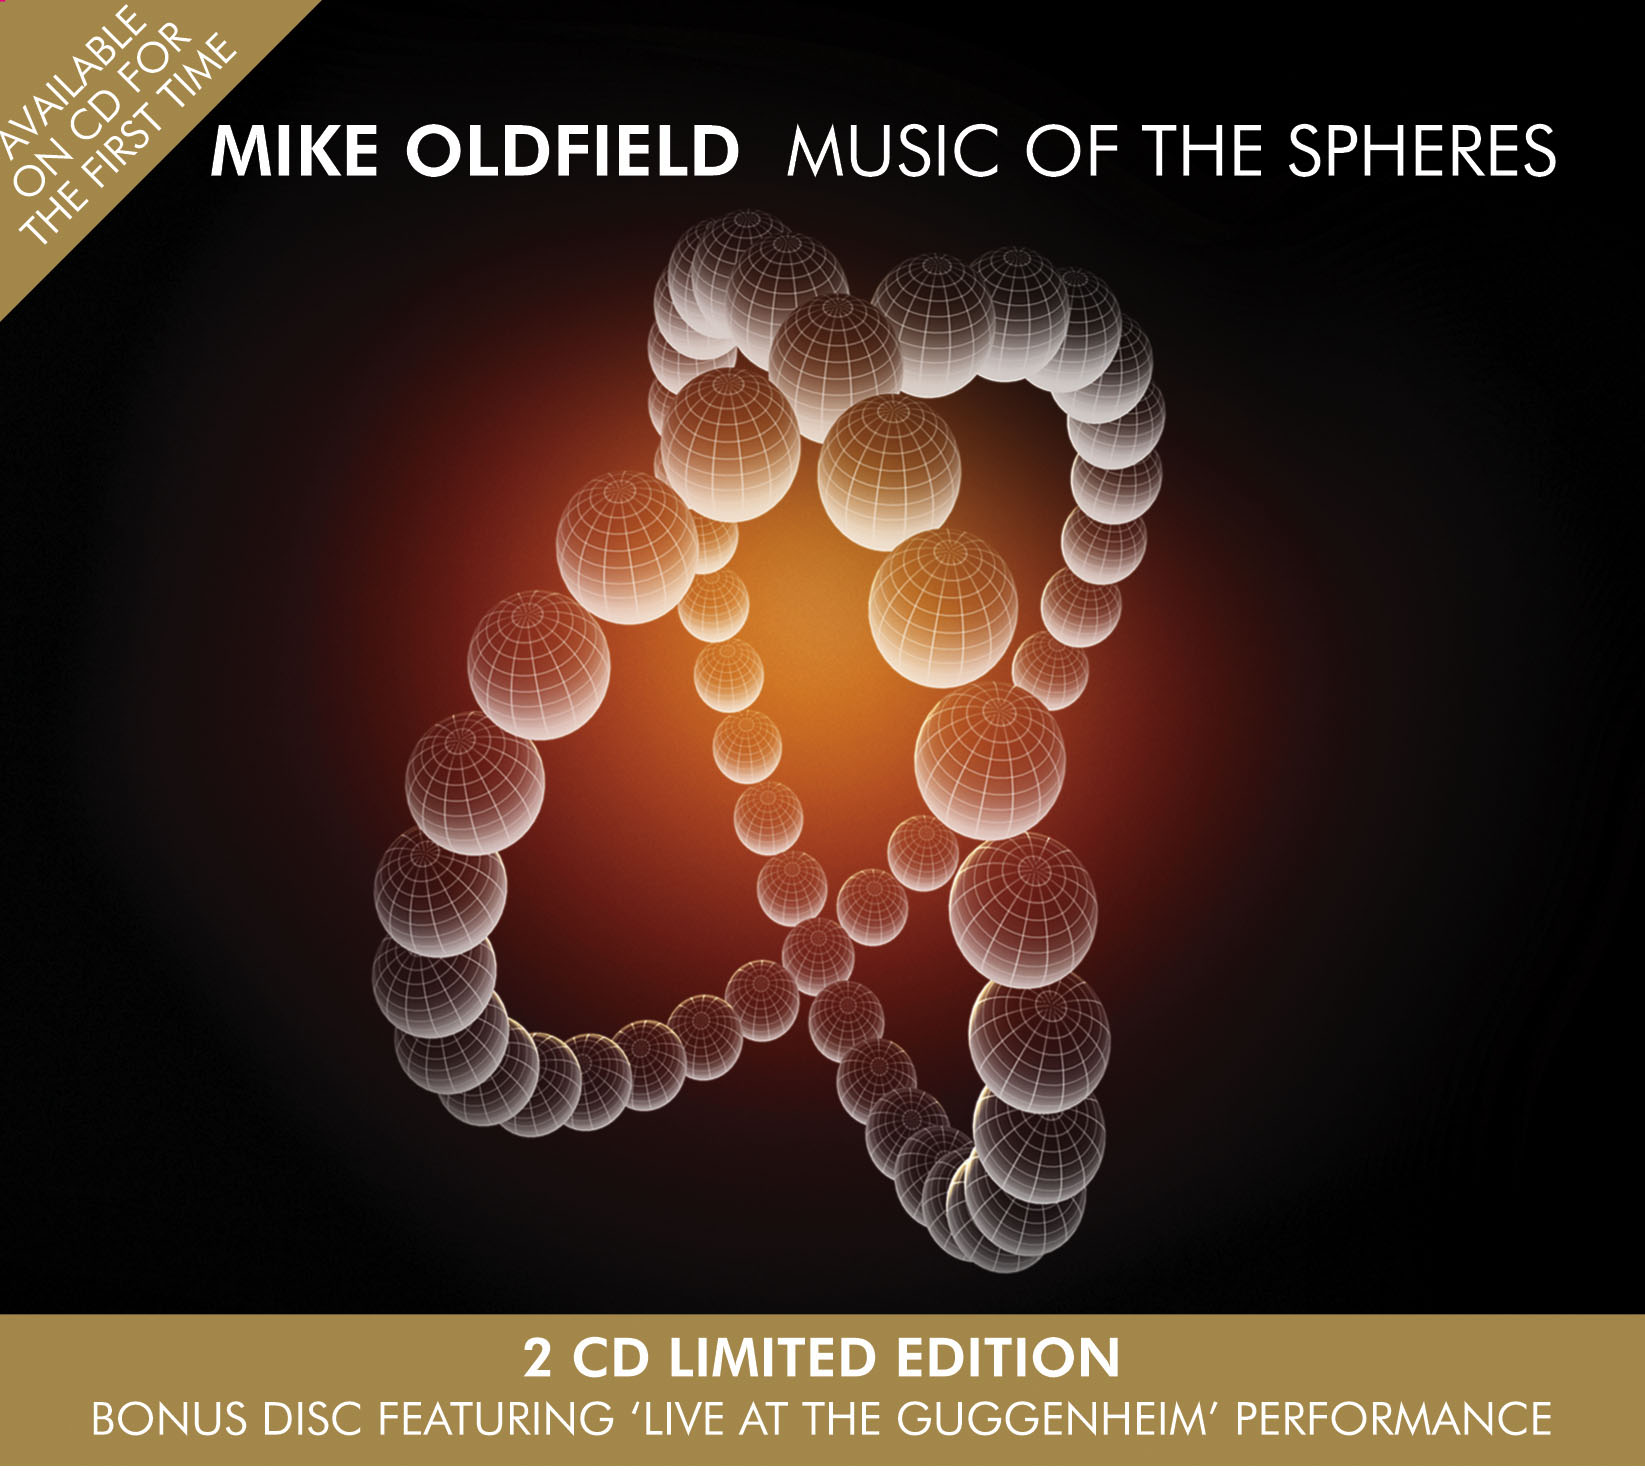 24 KARAT GOLD CD Mike Oldfield "TUBULAR BELLS" Digital Remastered selten 